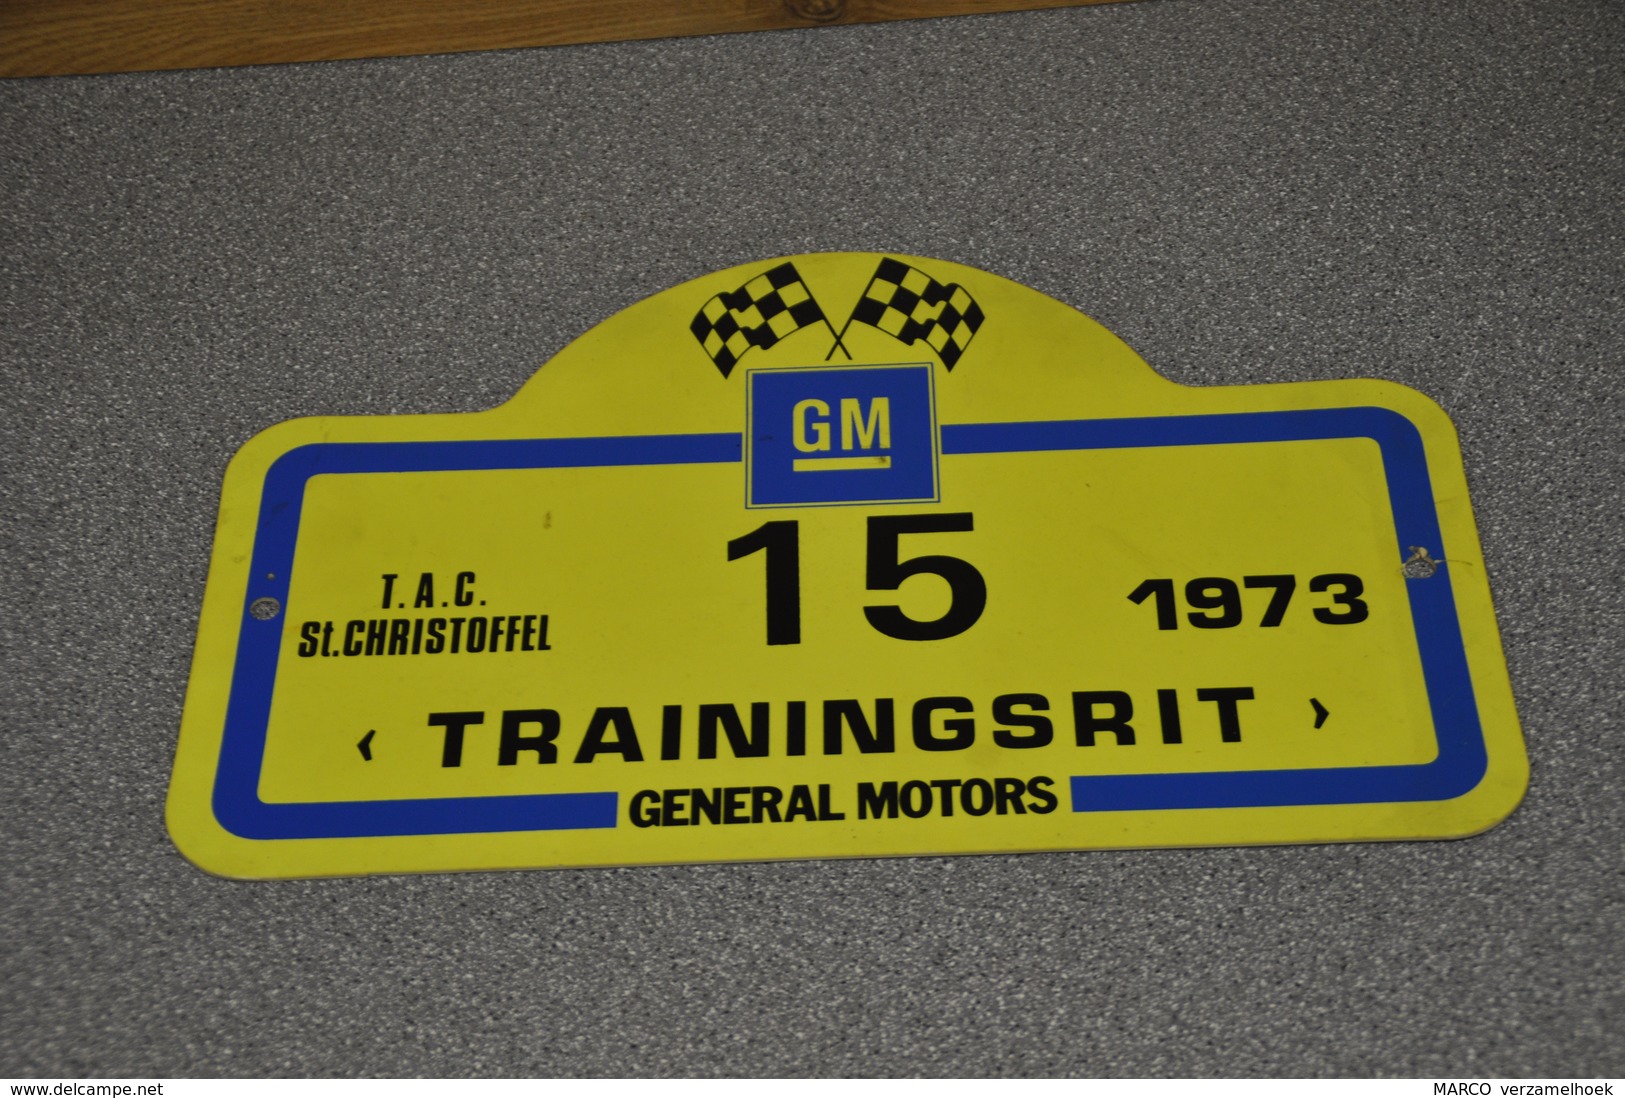 Rally Plaat-rallye Plaque Plastic: Trainingsrit Tilburgse Automobielclub 1973 GM General Motors - Rally-affiches